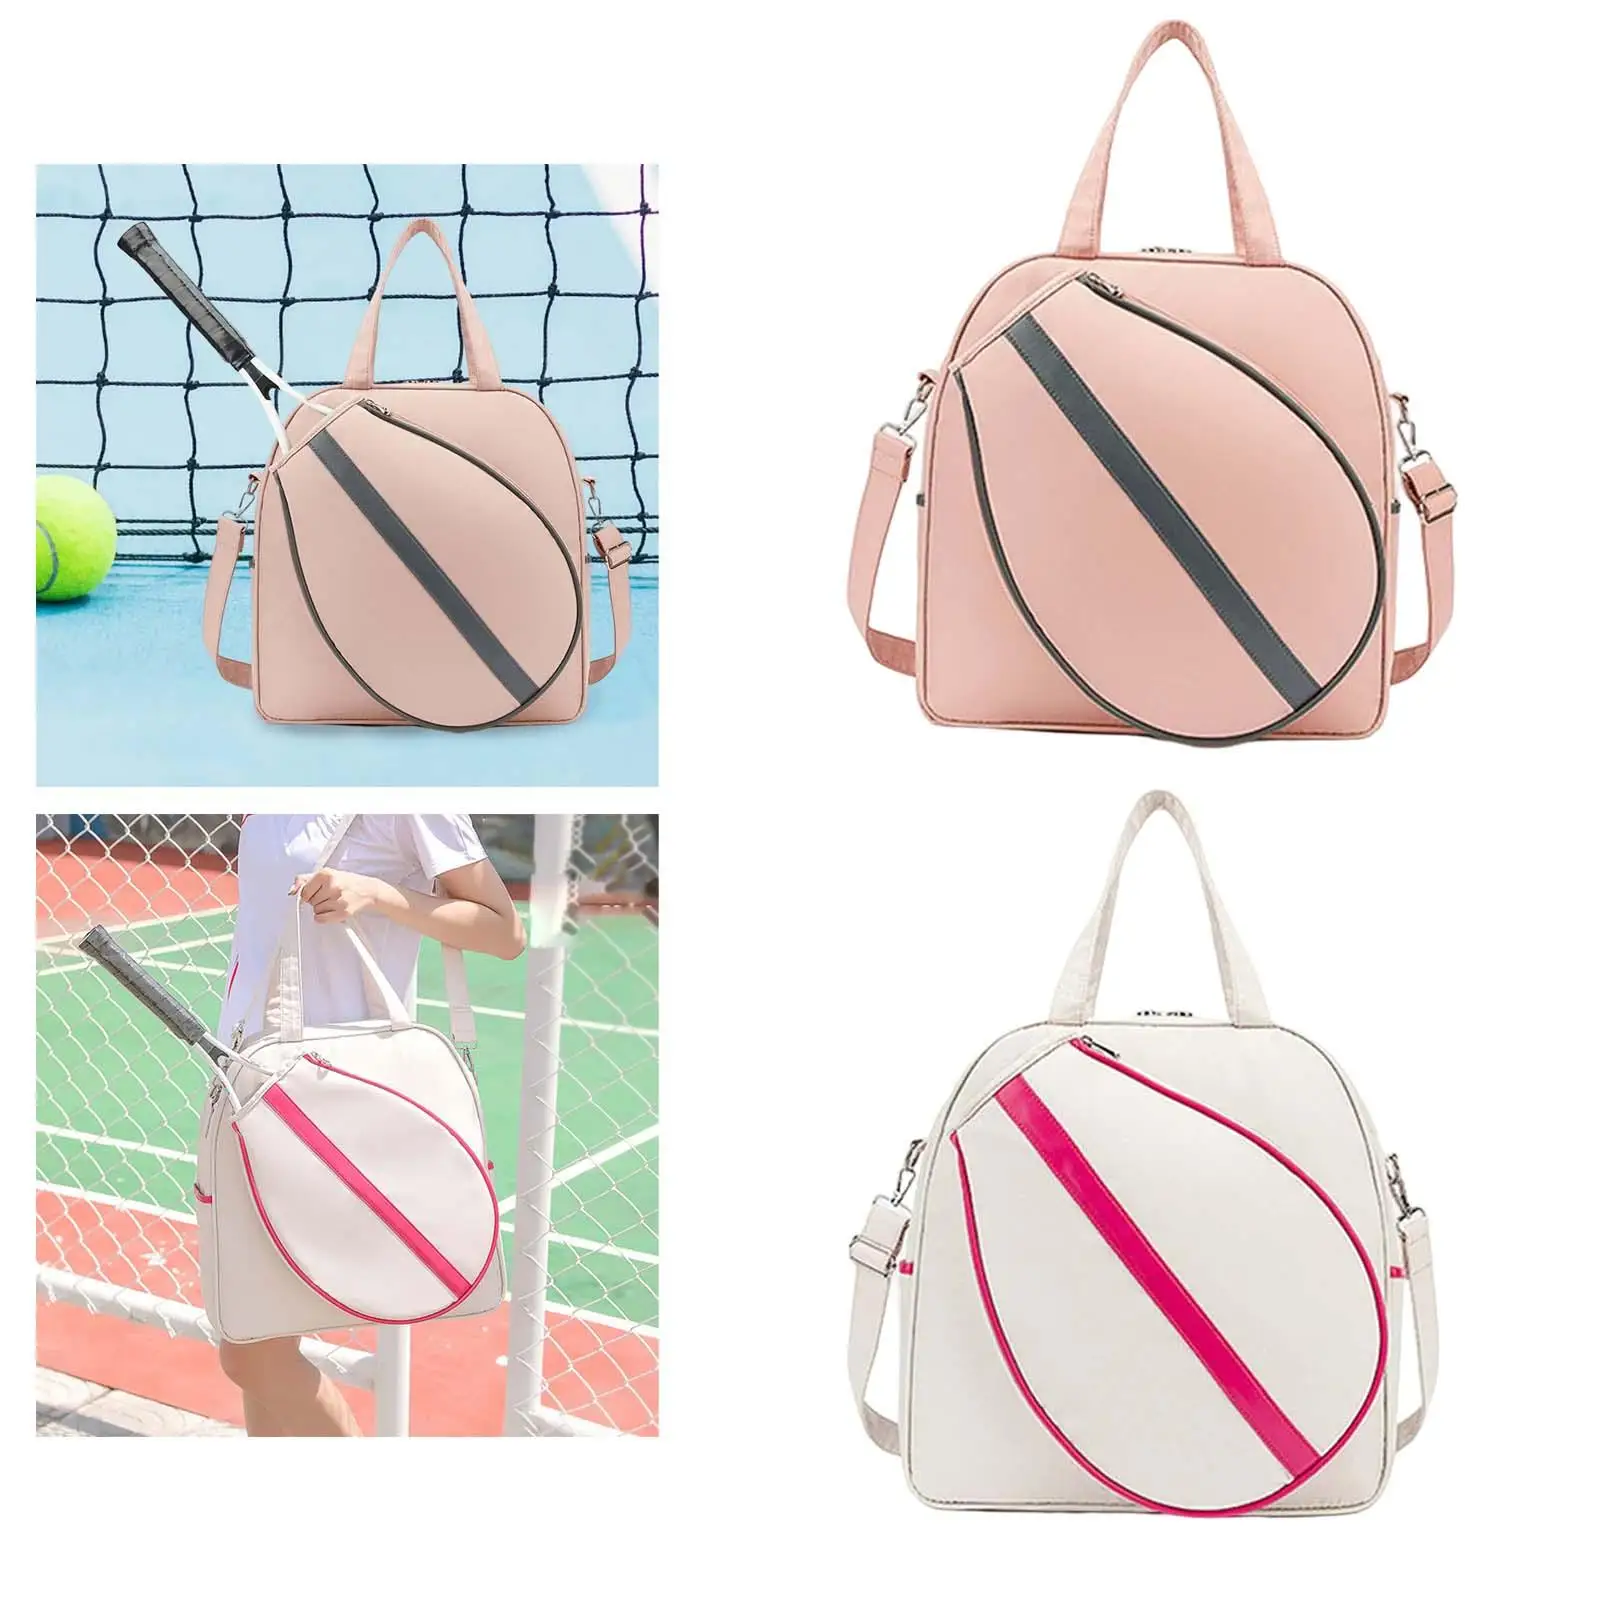 Tennis Tote, Tennis Racket Shoulder Bag, Large Tennis Bag with Zipper & Shoulder Strap for Badminton Racquet, Sport Tote for 